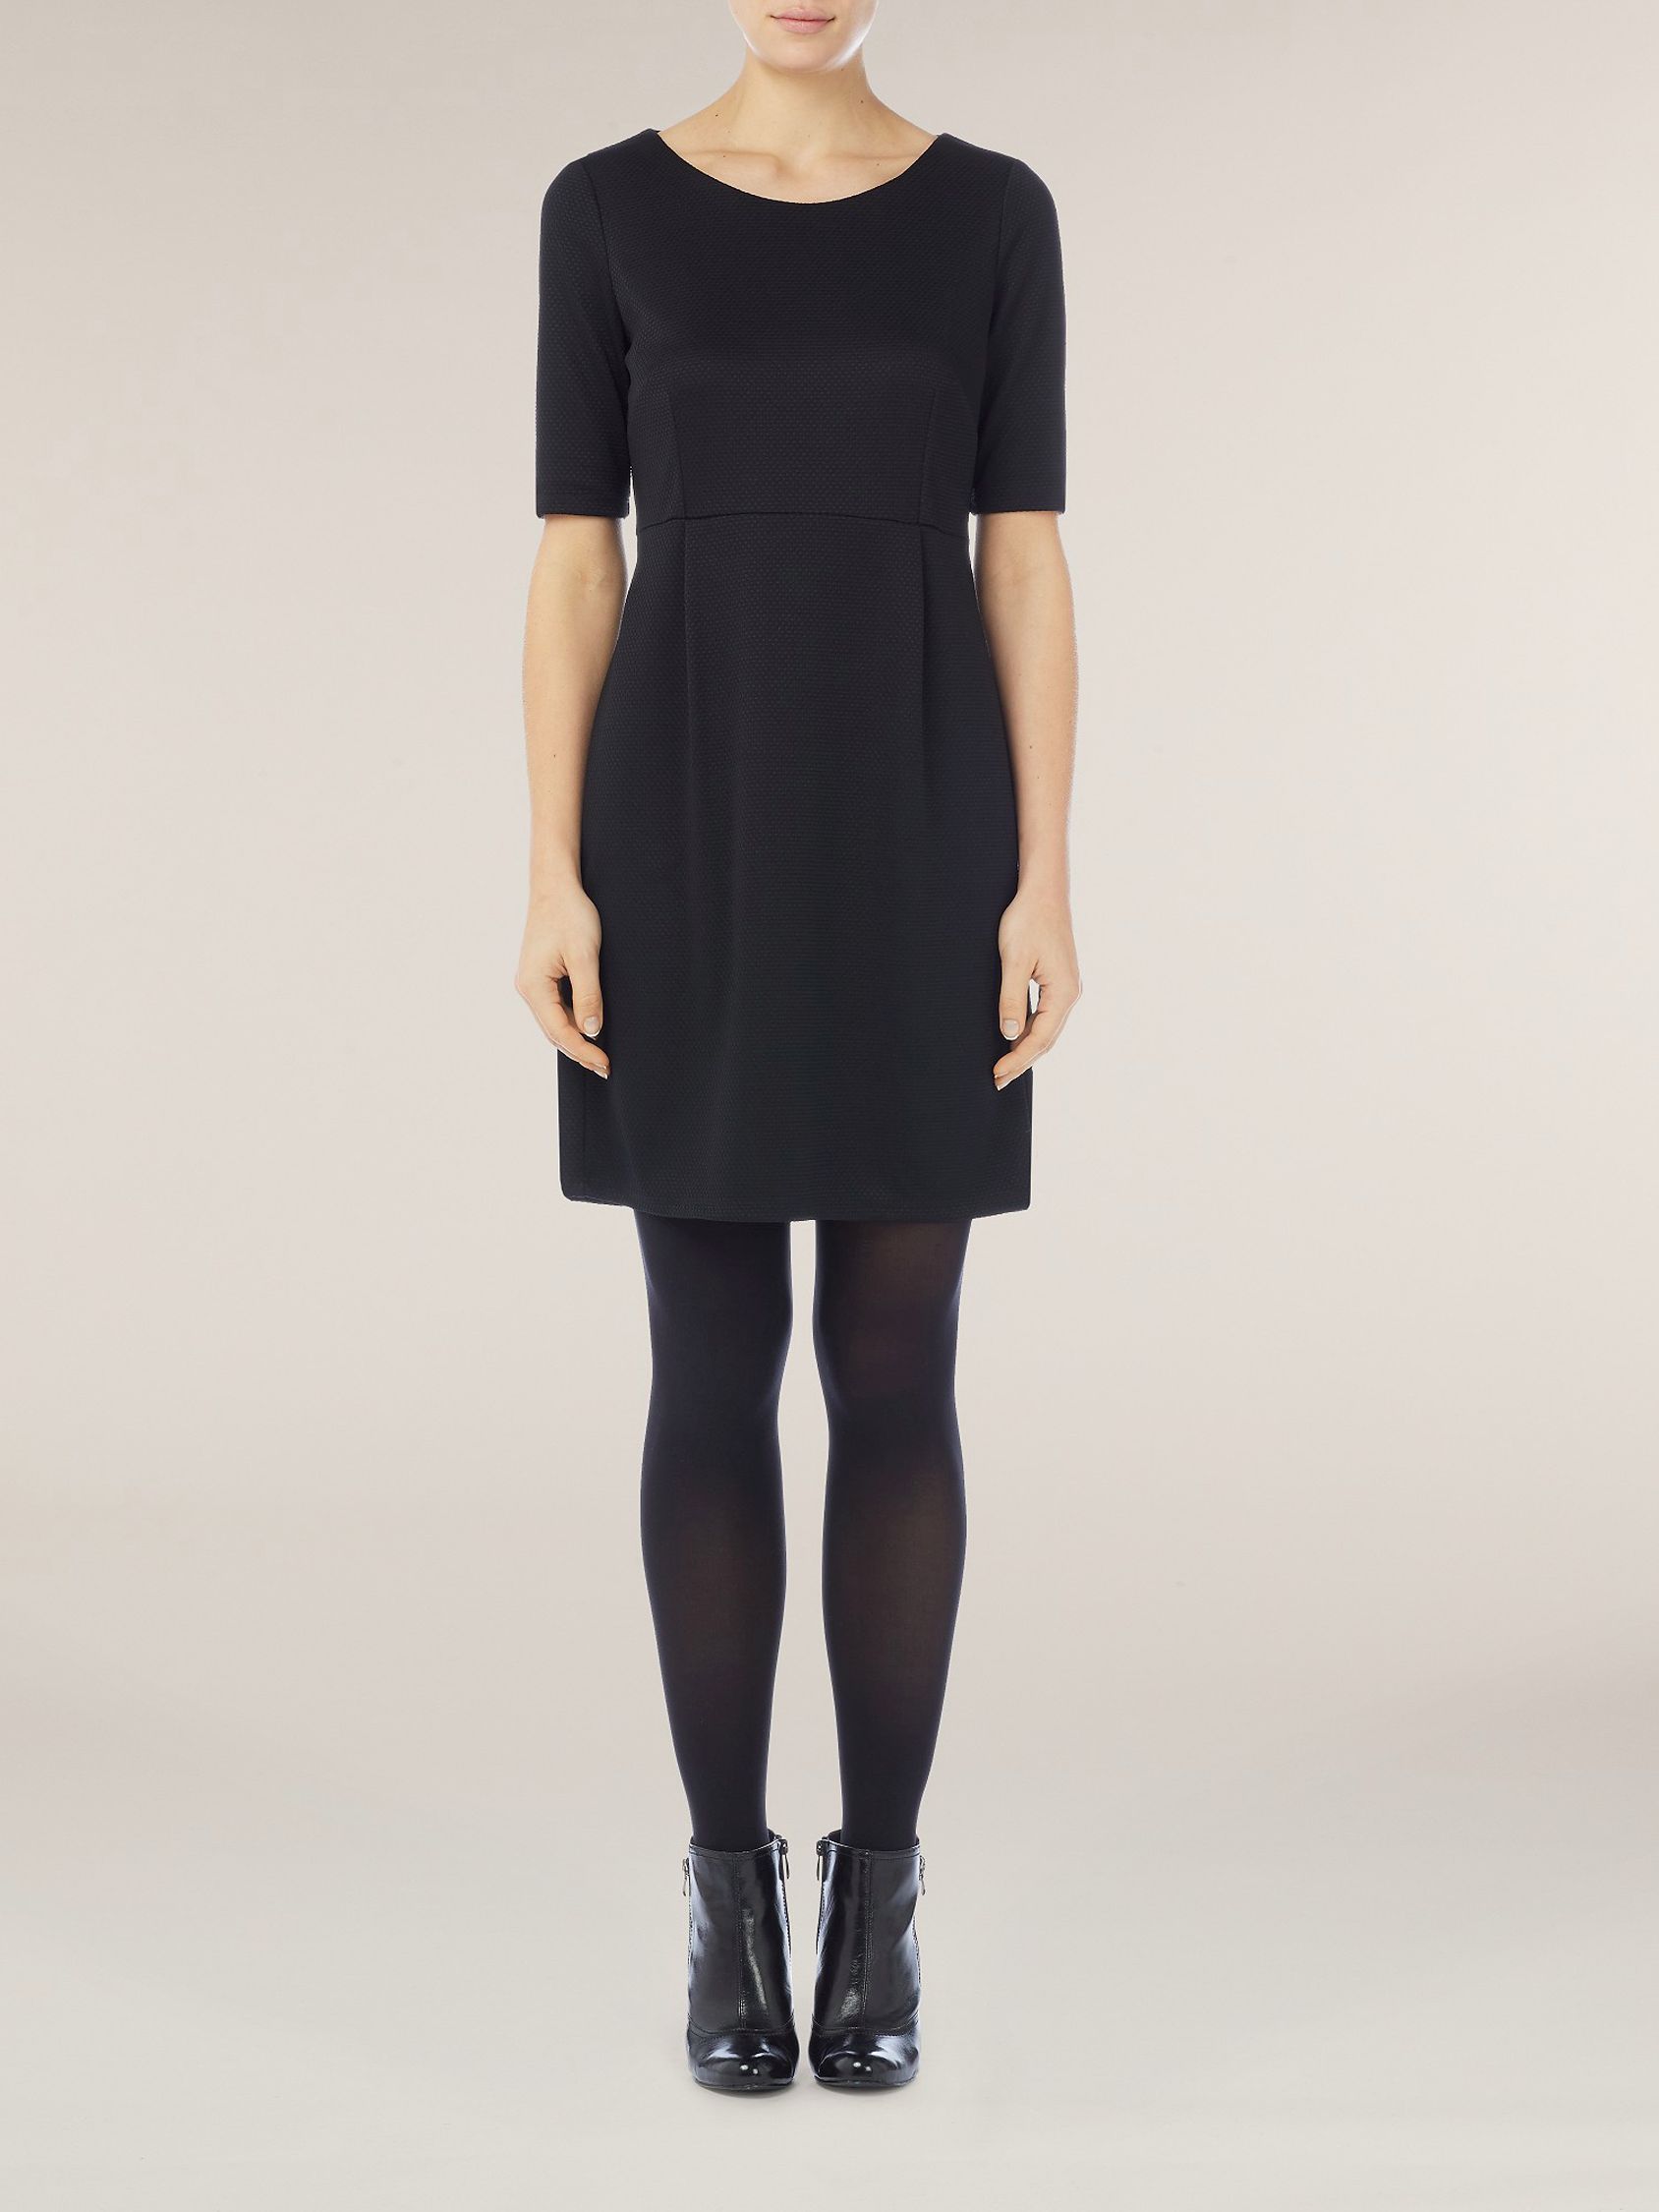 Kaliko Textured Dress, Black at John Lewis & Partners